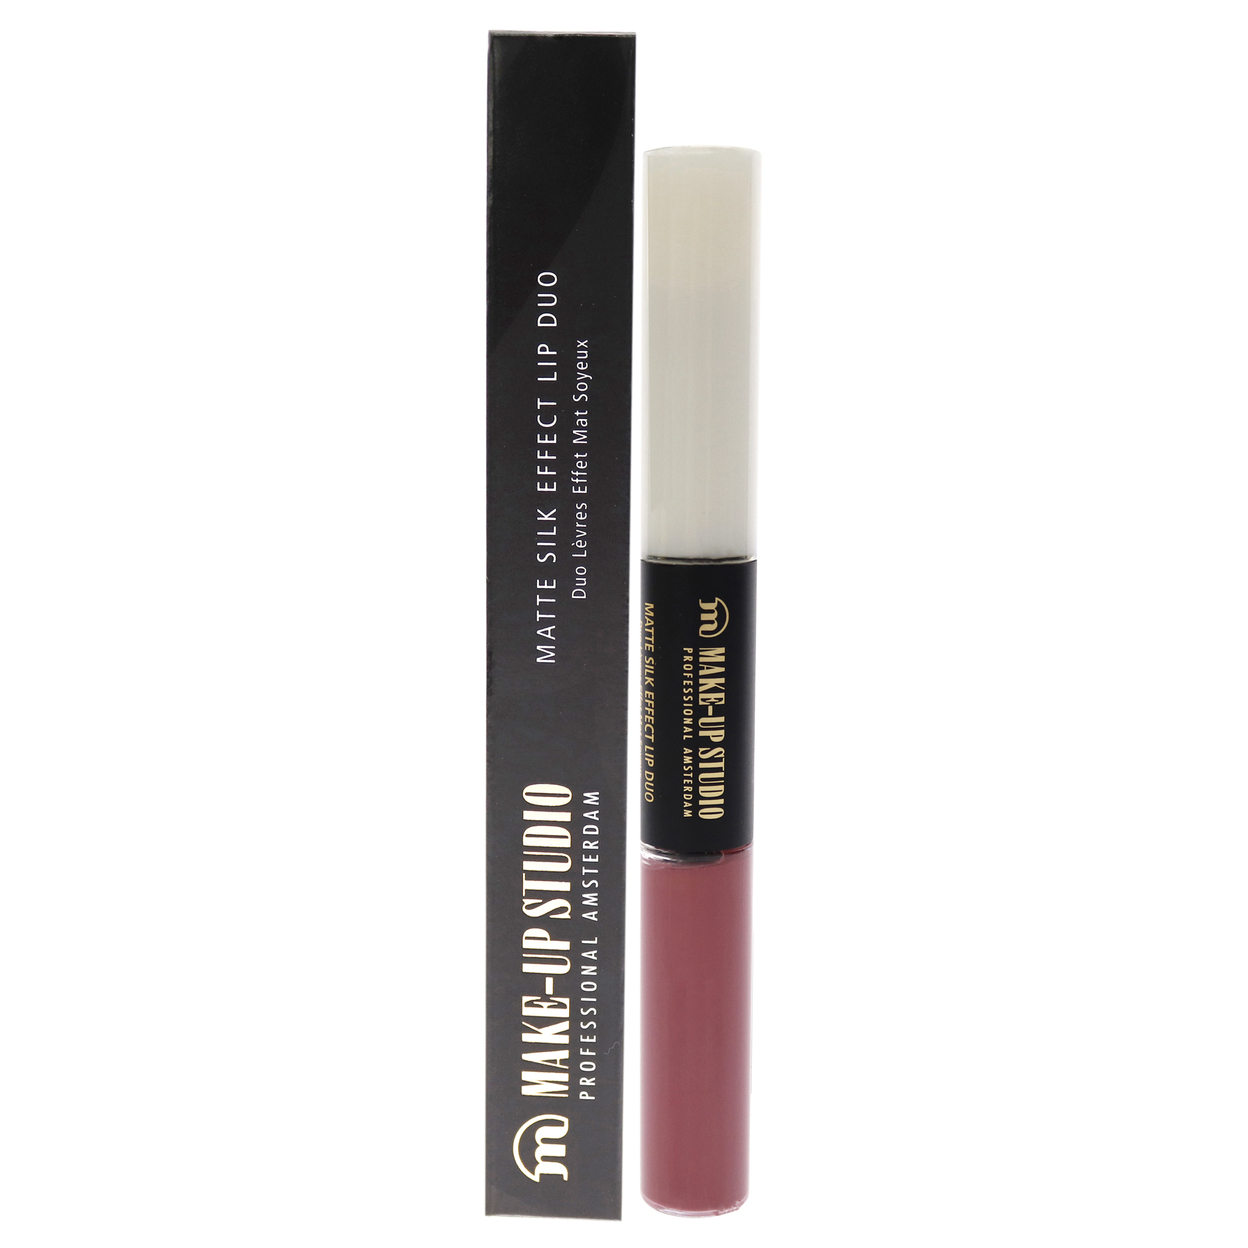 Make-Up Studio Matte Silk Effect Lip Duo - Cherry Blossom Lipstick 0.2 Oz